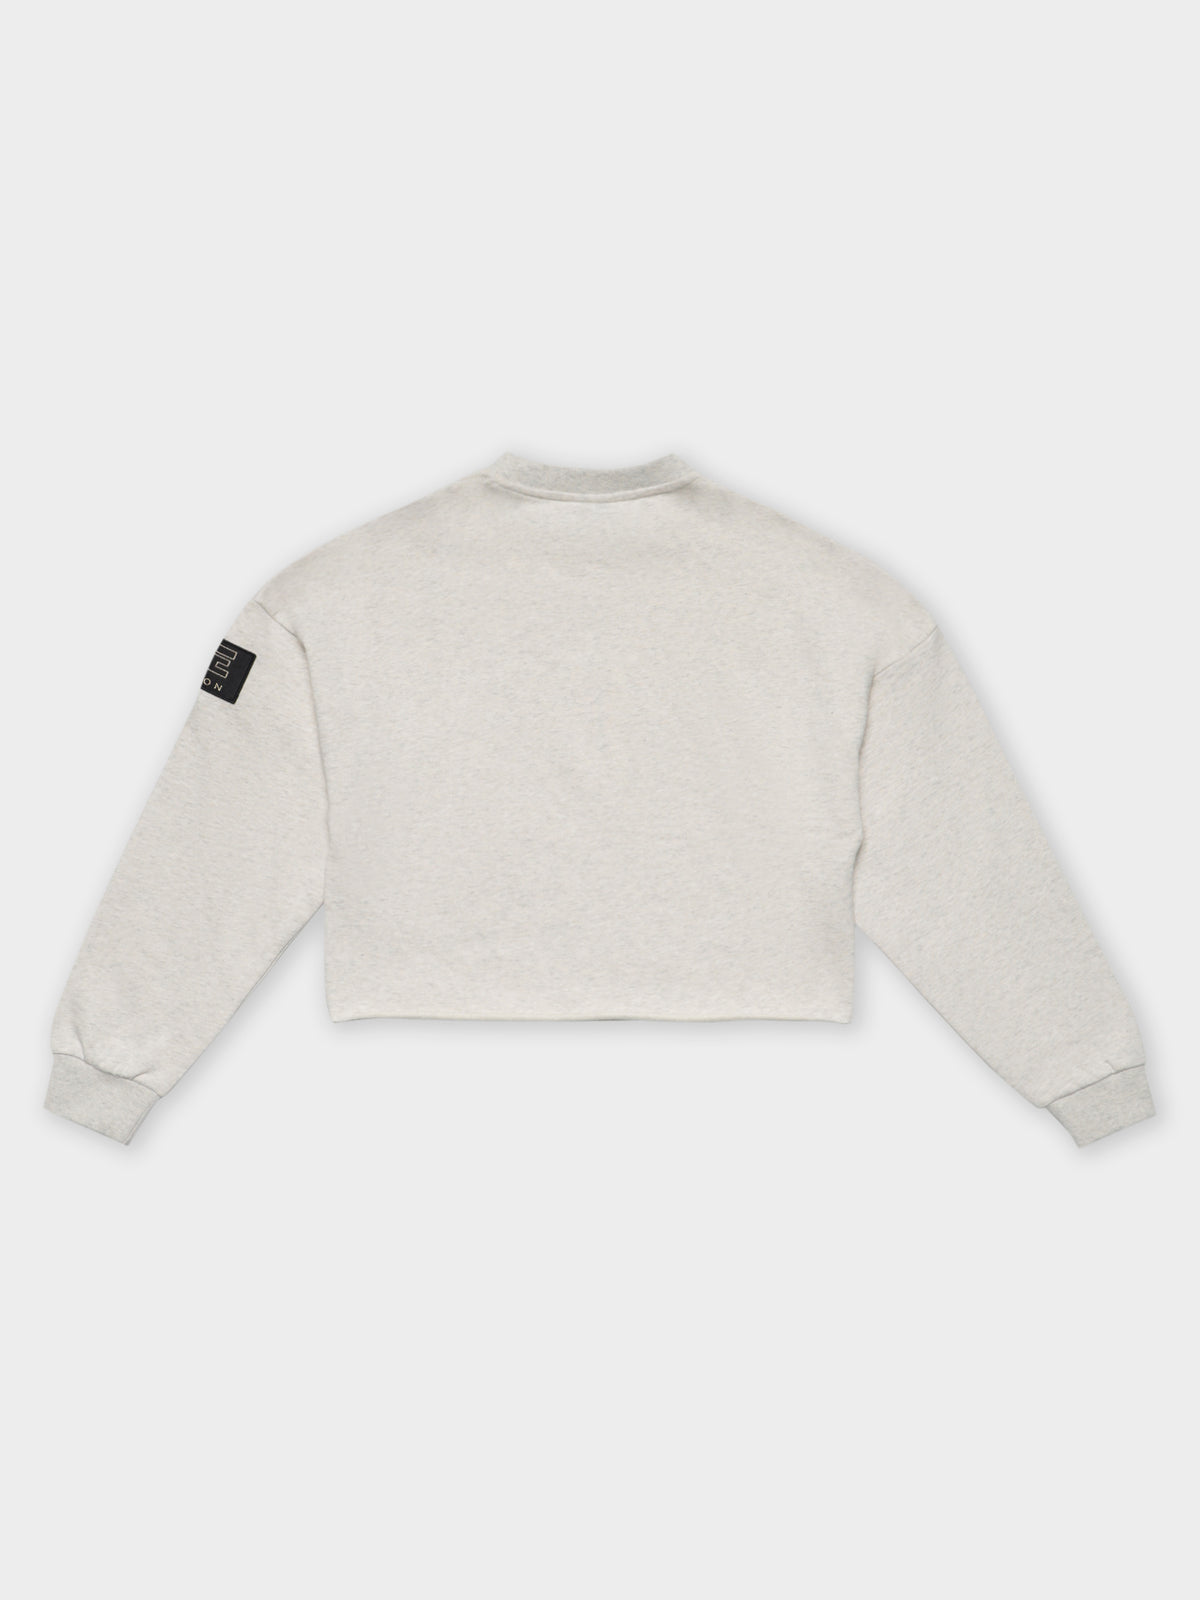 Trailblazer Sweatshirt in Light Grey